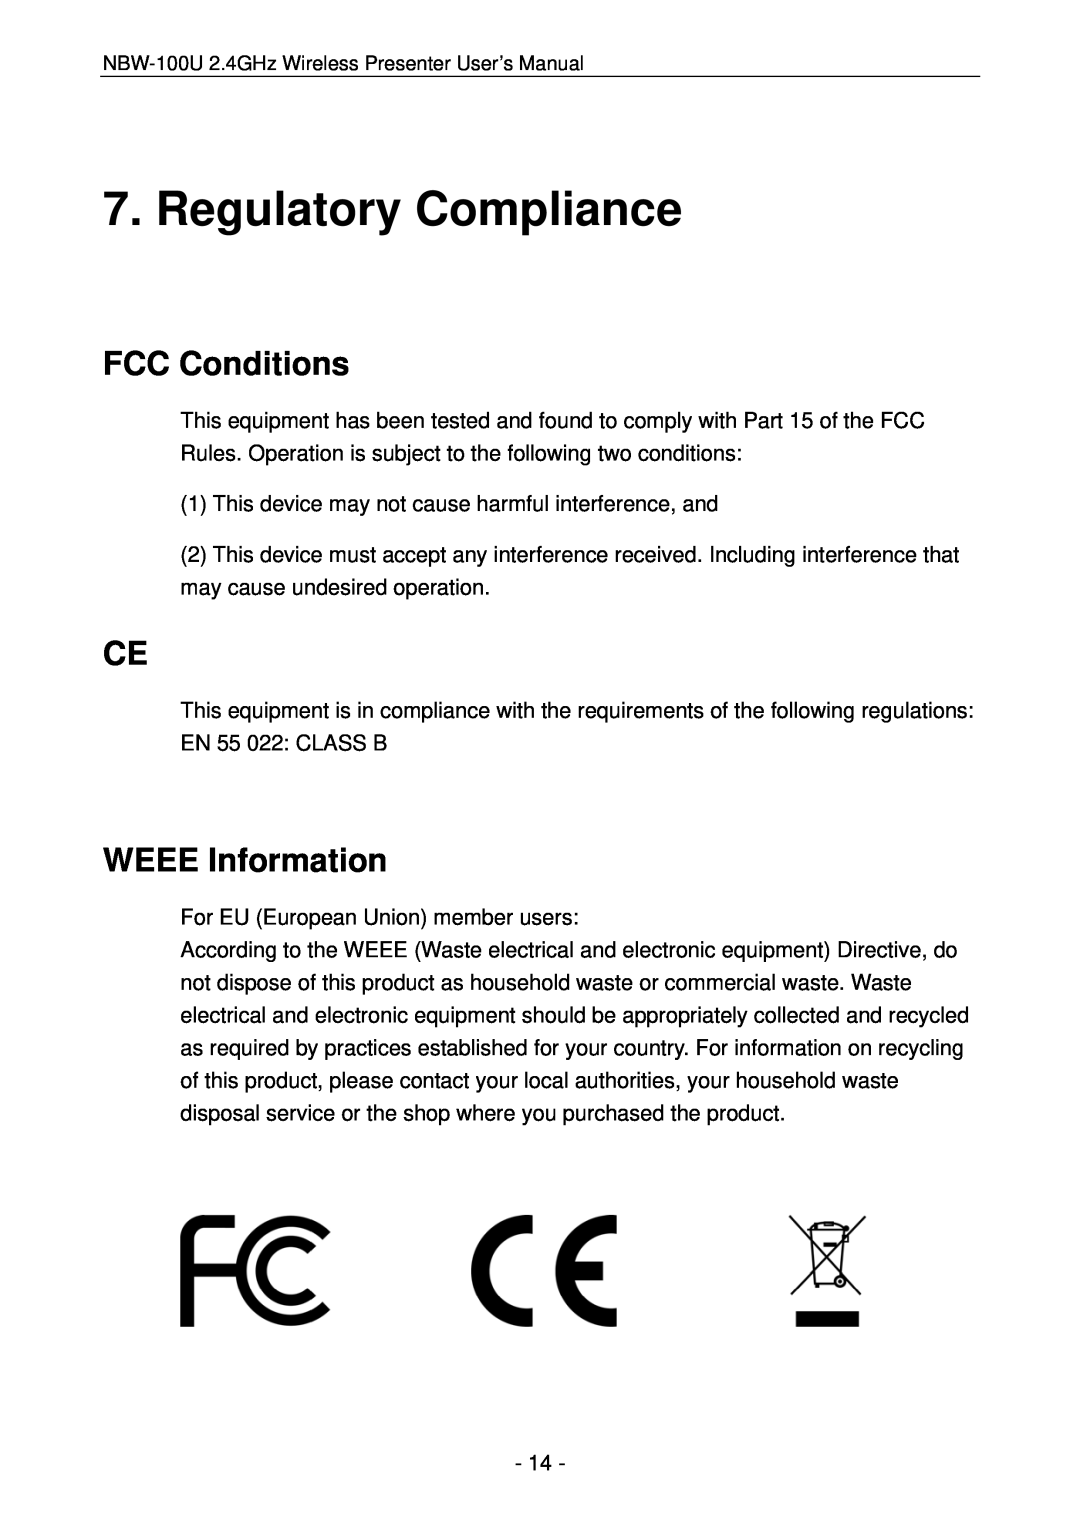 Vantec NBW-100U user manual Regulatory Compliance, FCC Conditions, WEEE Information 